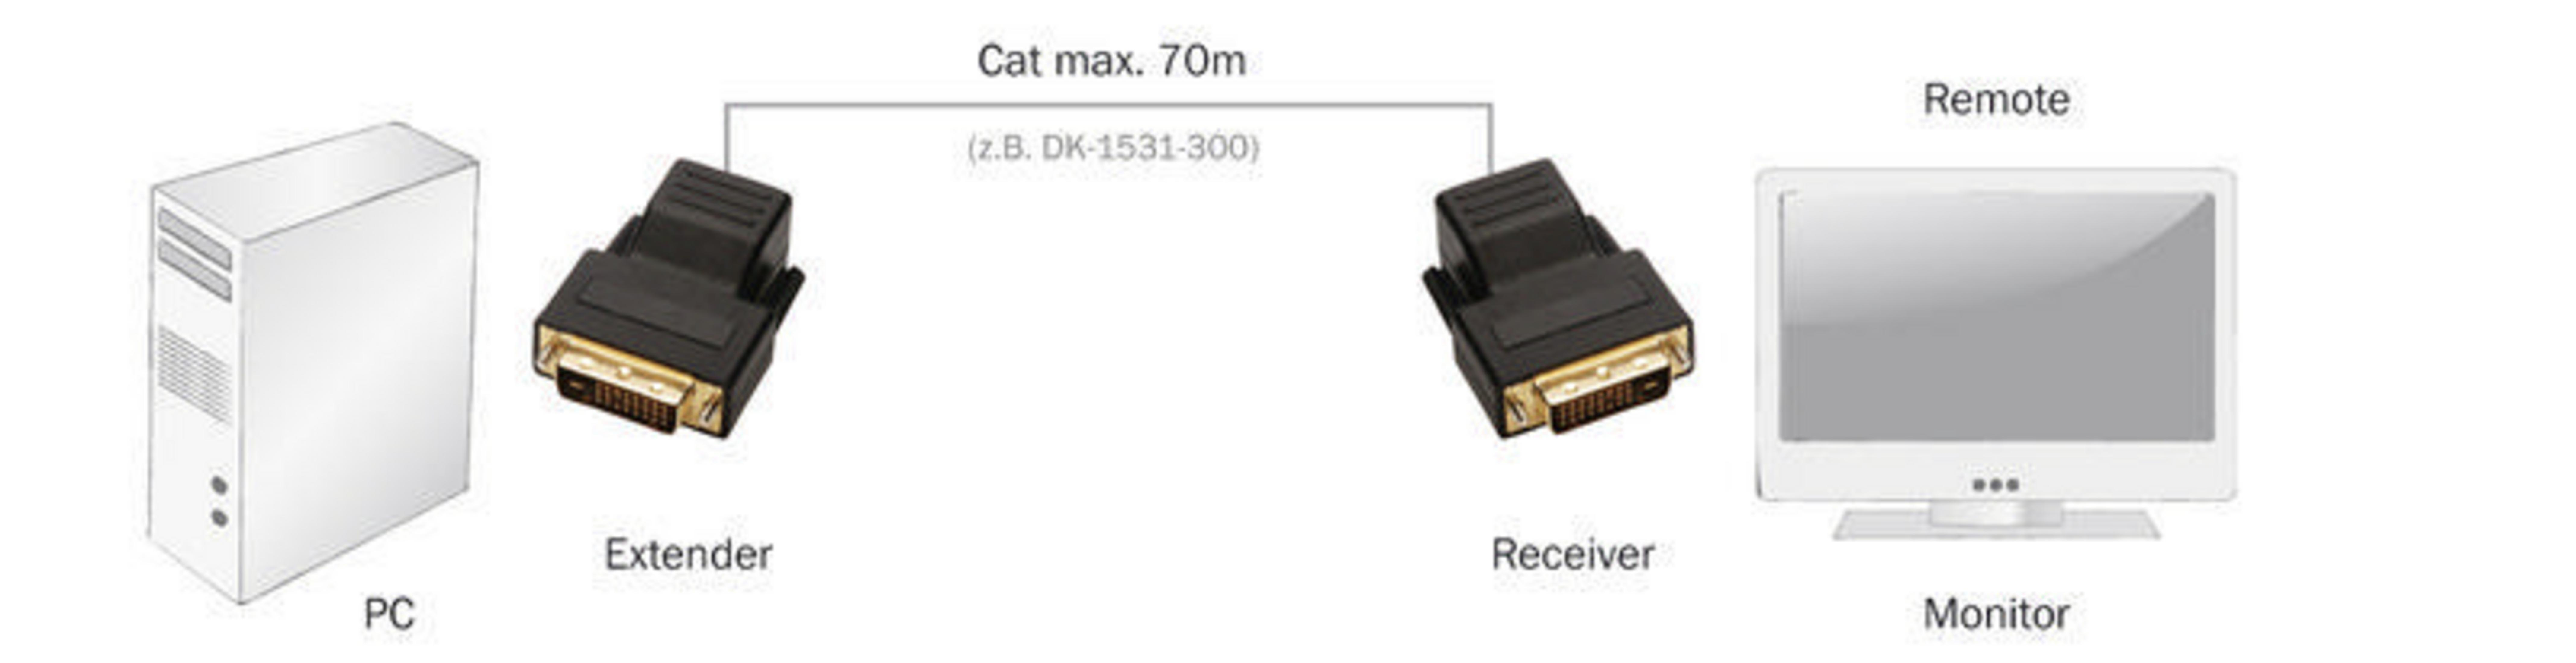 DVI EXTENDER DS-54101 CAT5 DIGITUS 70M DVI Extender